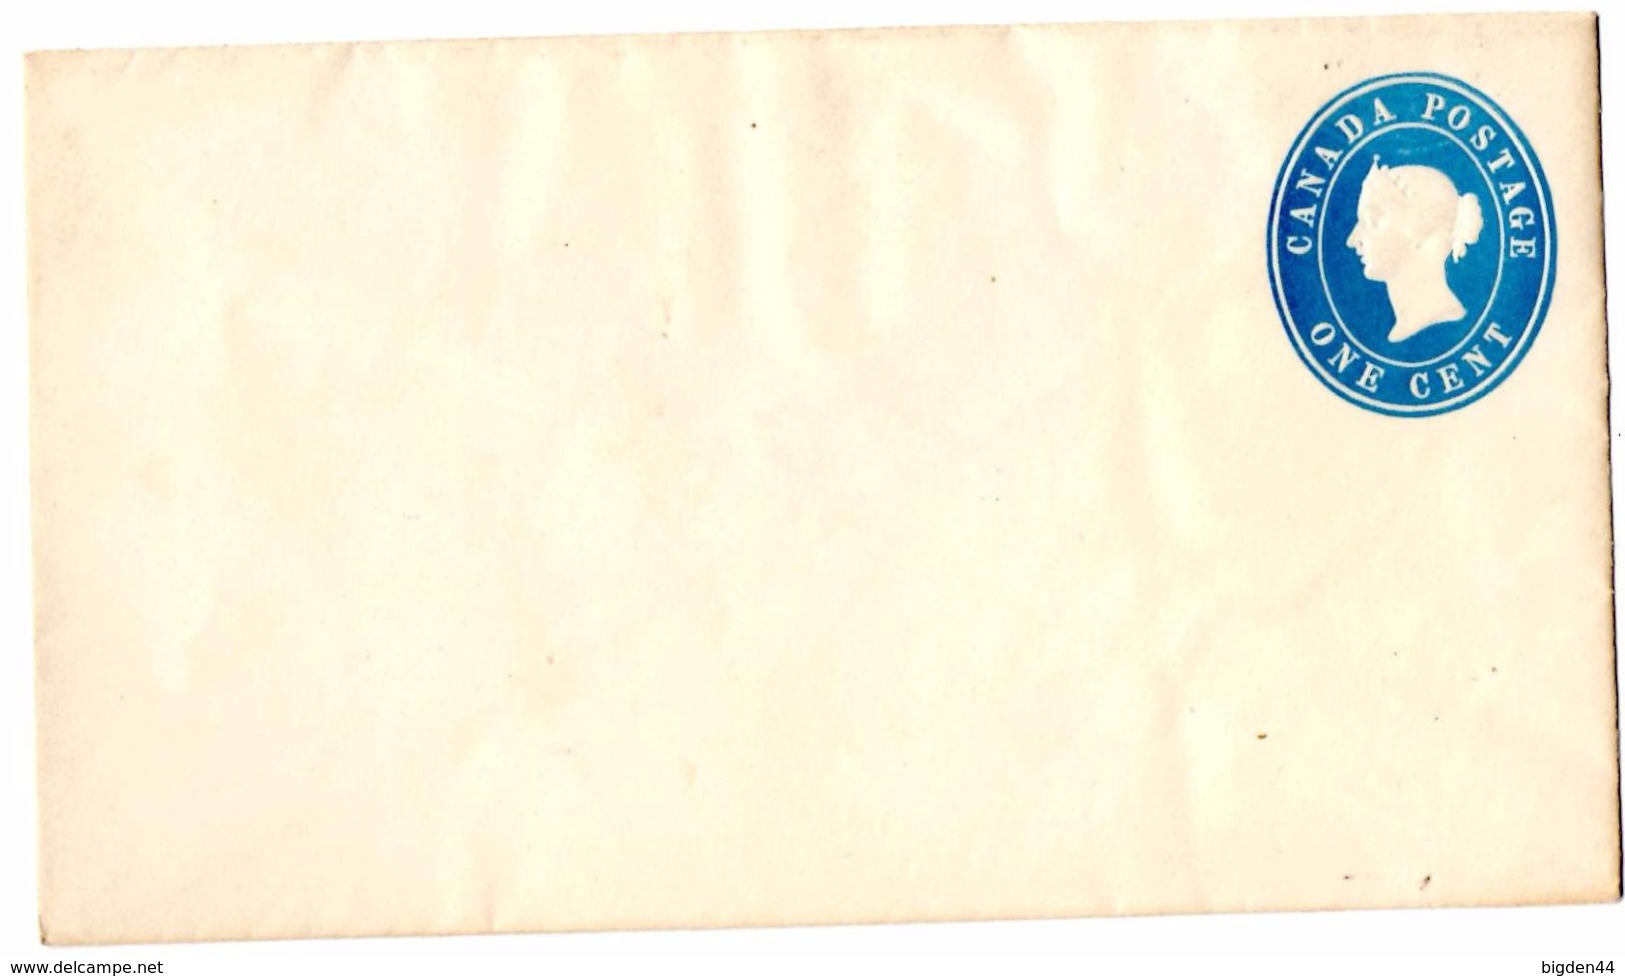 Enveloppe_1 Cent Blue_Victoria - 1860-1899 Regering Van Victoria